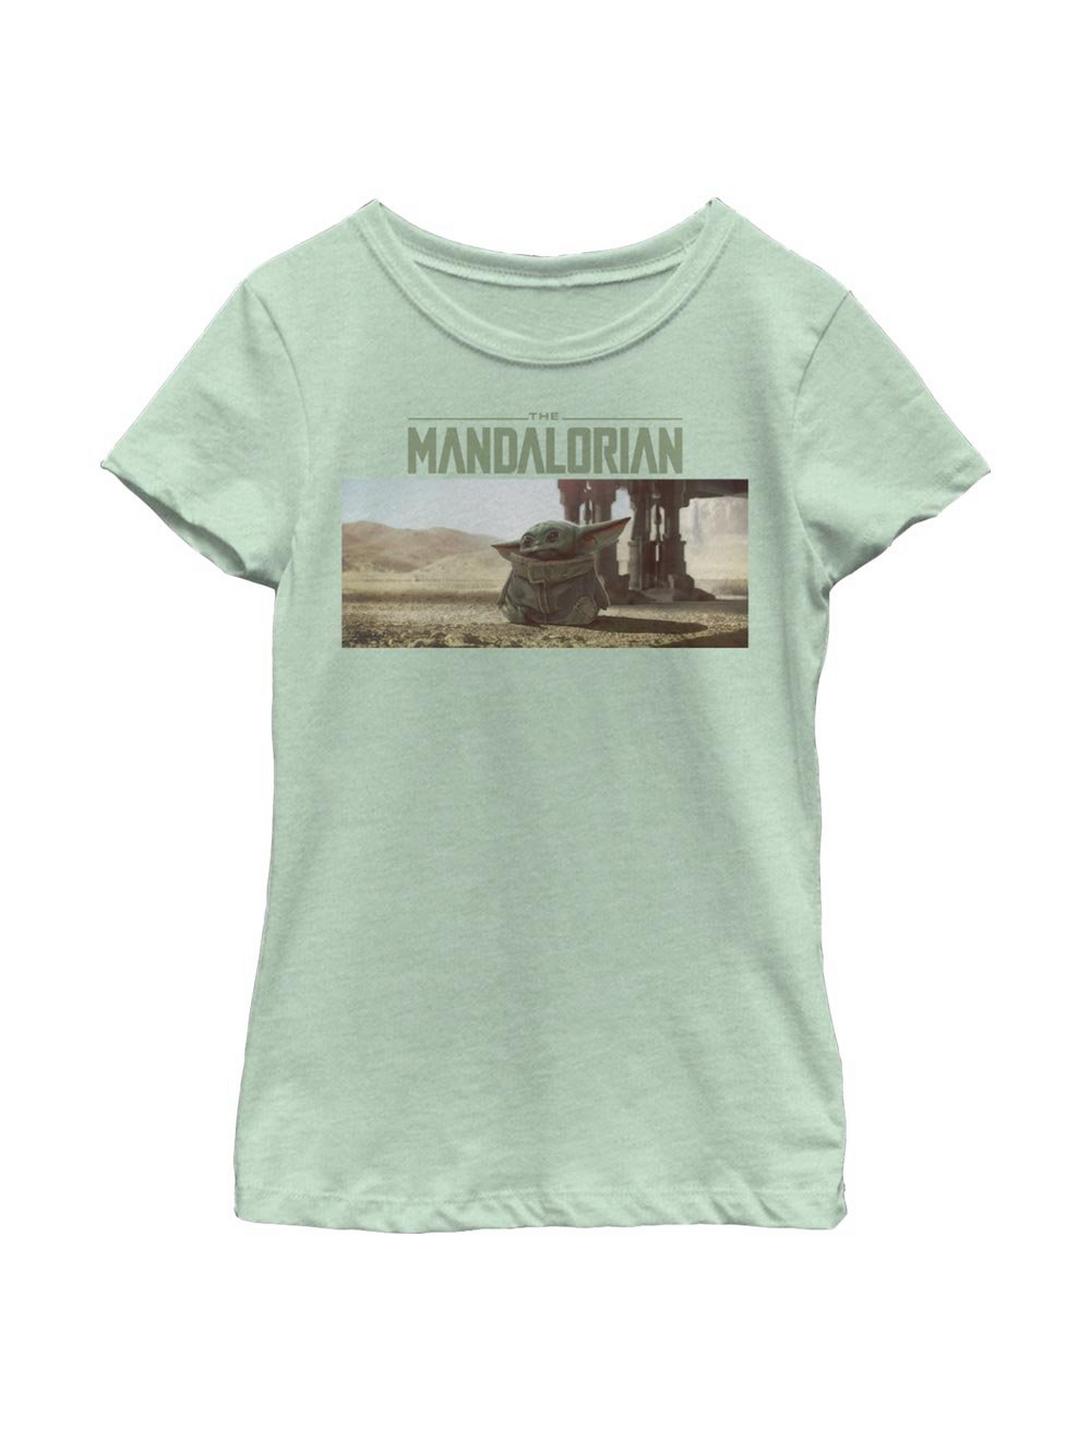 Plus Size Star Wars The Mandalorian The Child Landscape Scene Youth Girls T-Shirt, MINT, hi-res